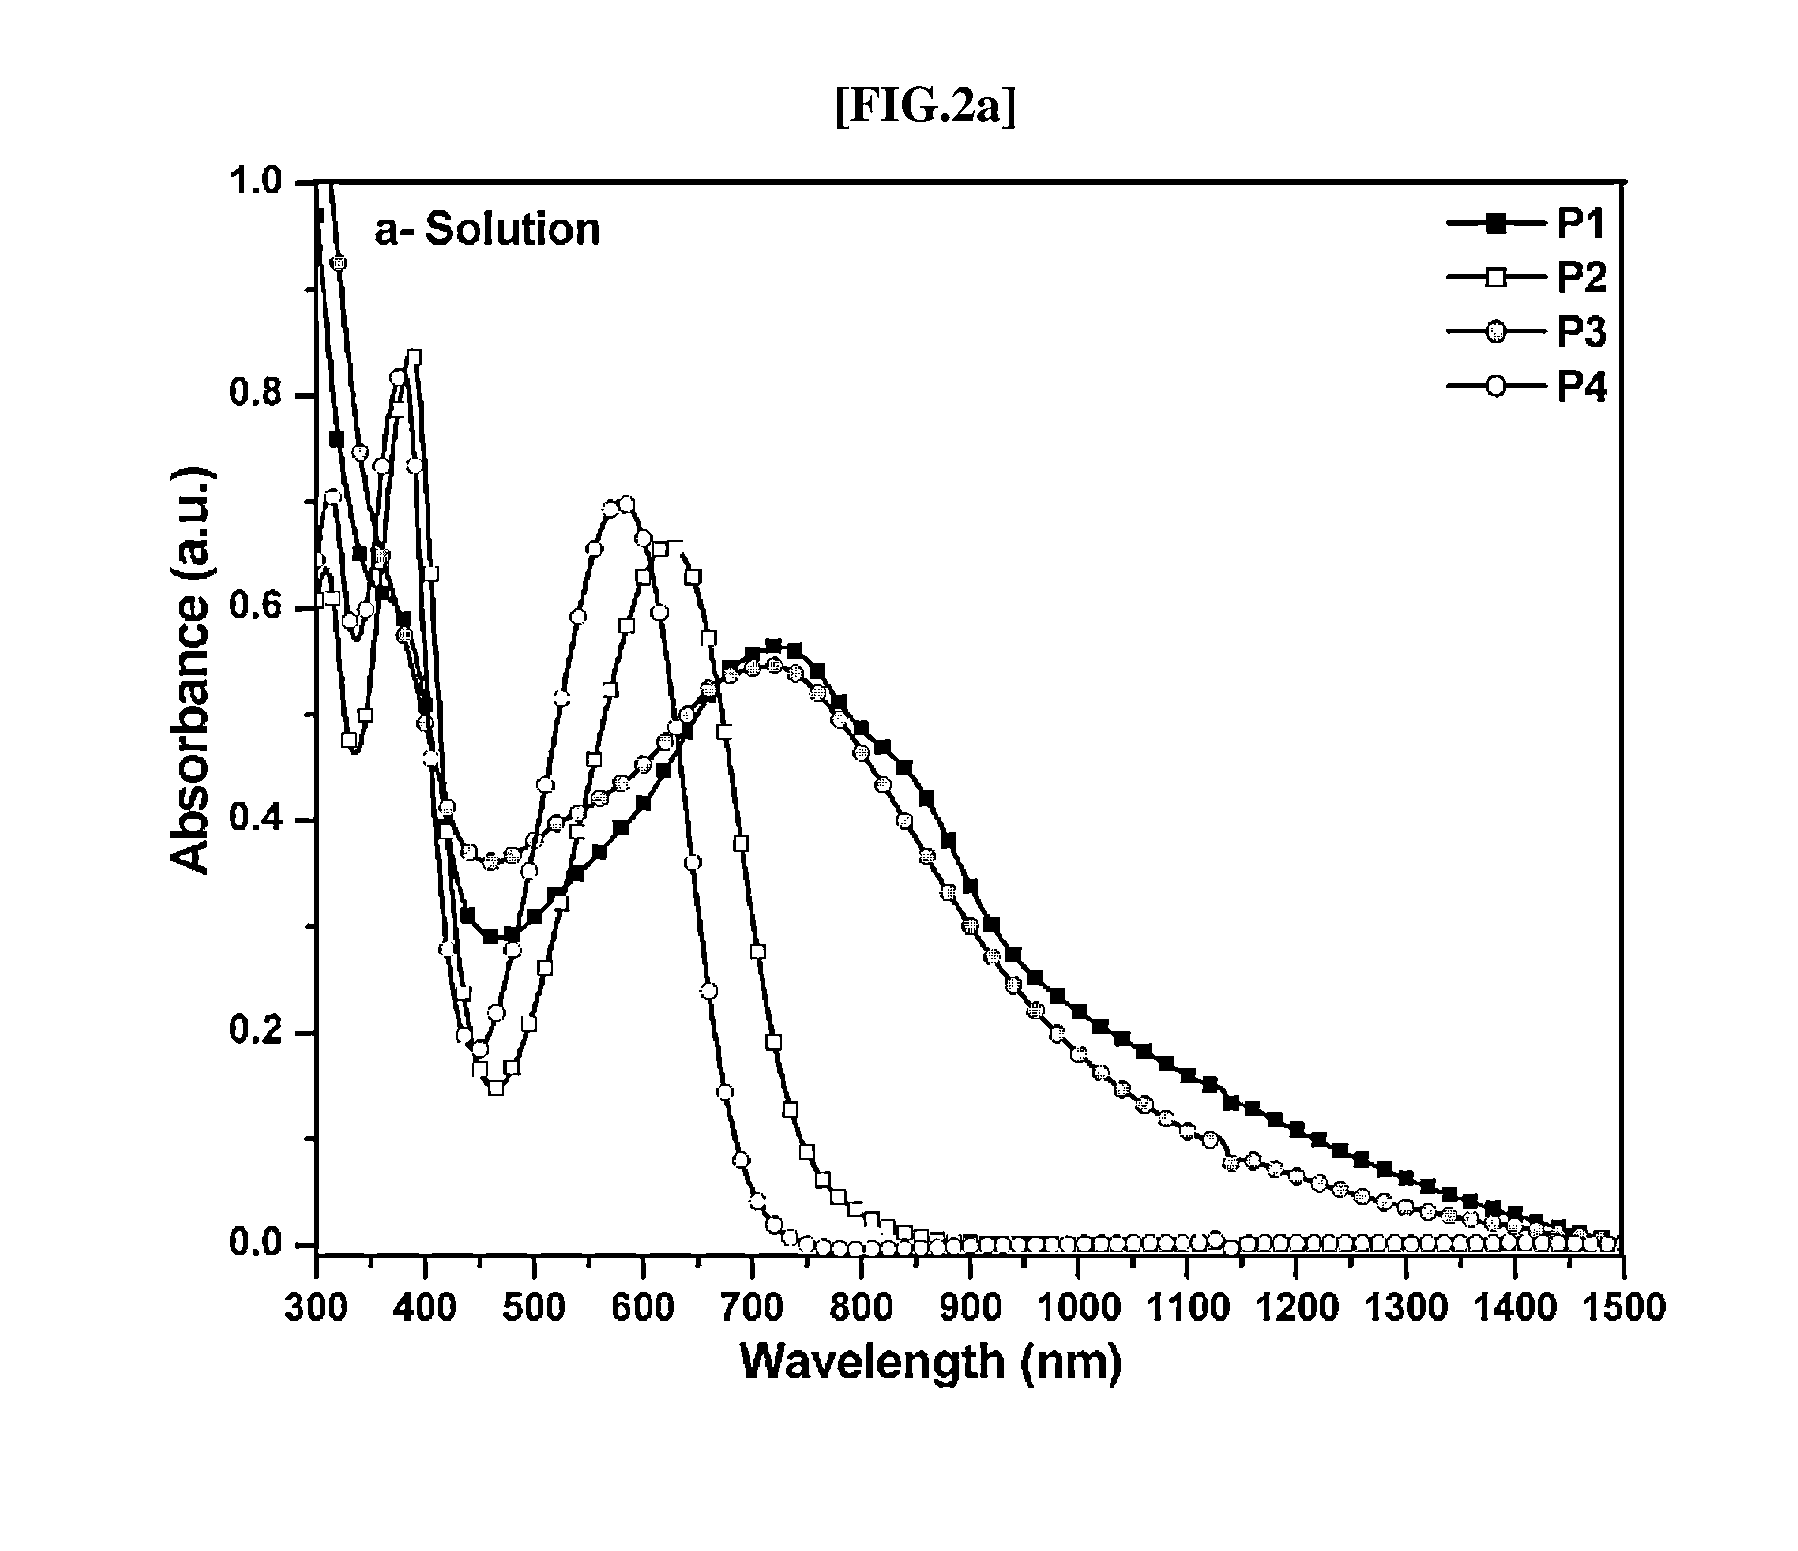 Direct ch arylation method using palladium-based catalyst